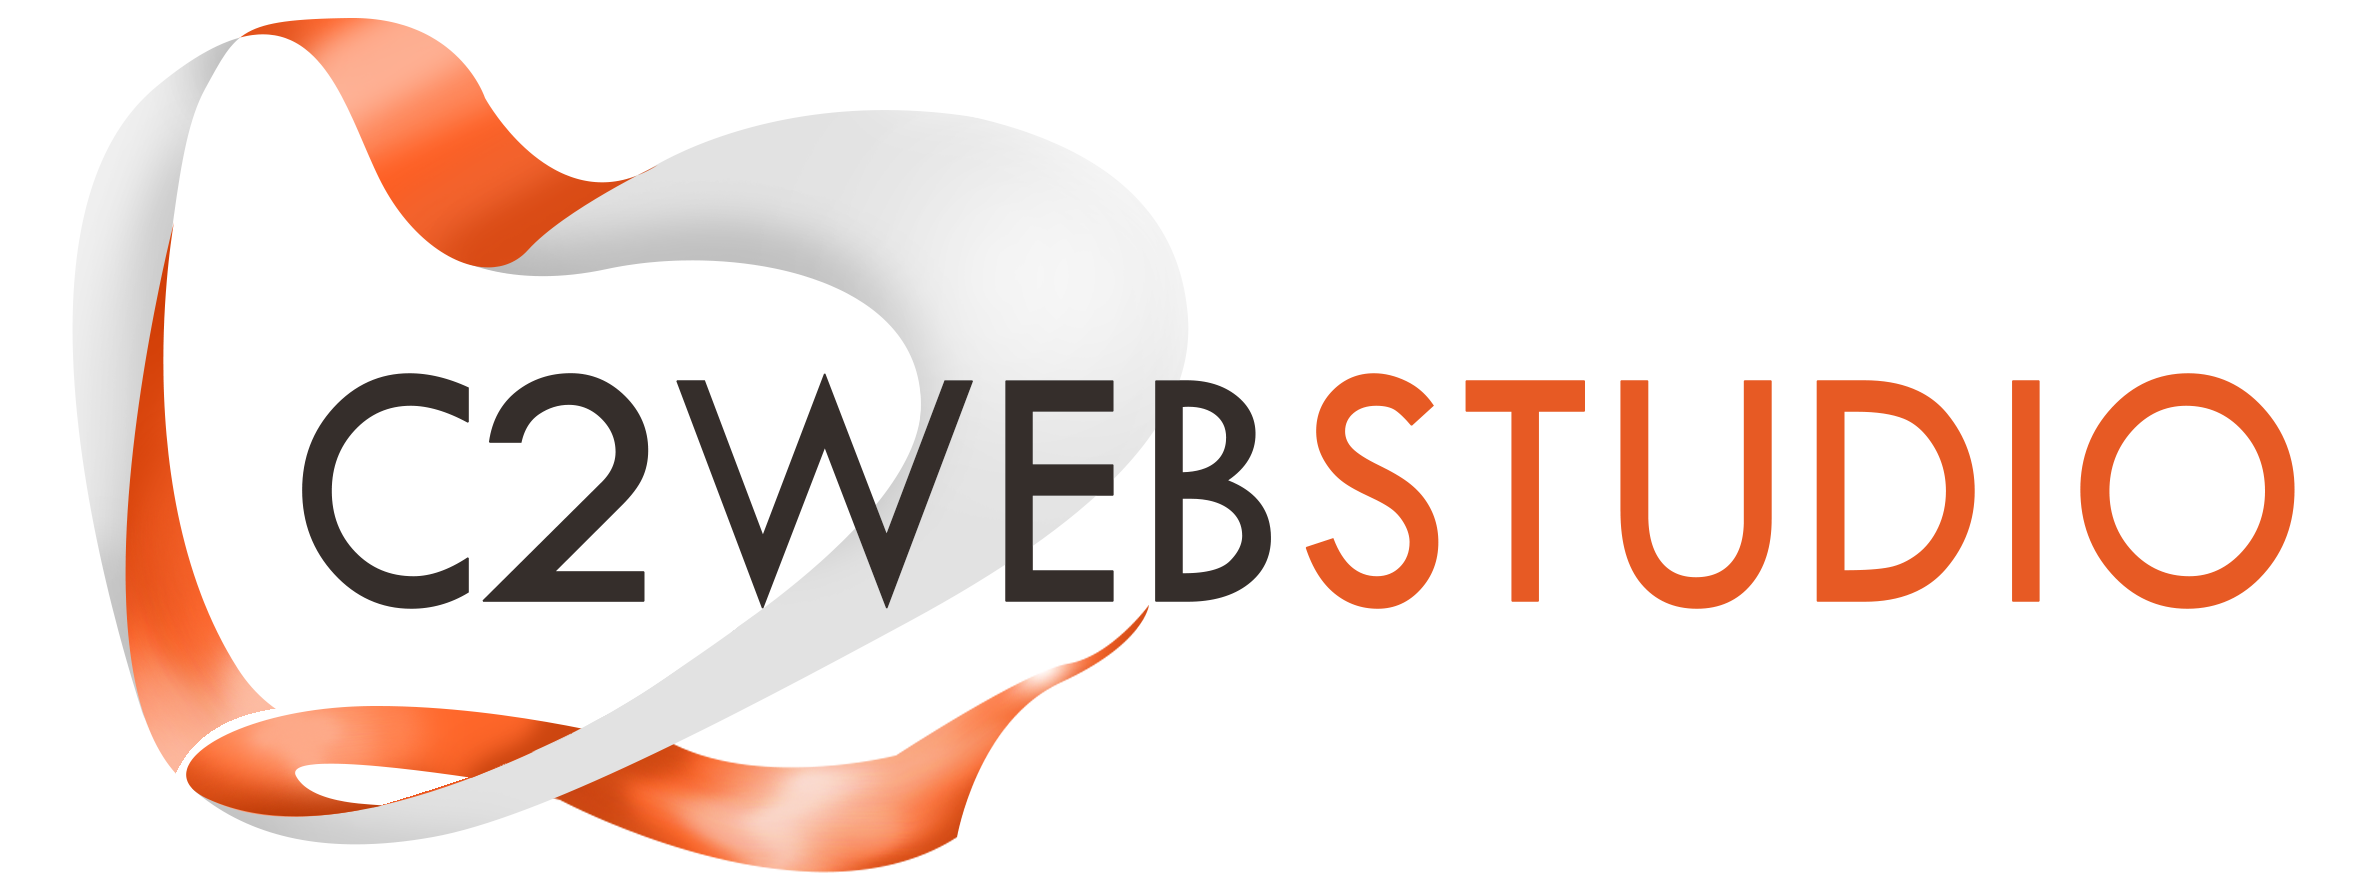 C2webstudio Logo